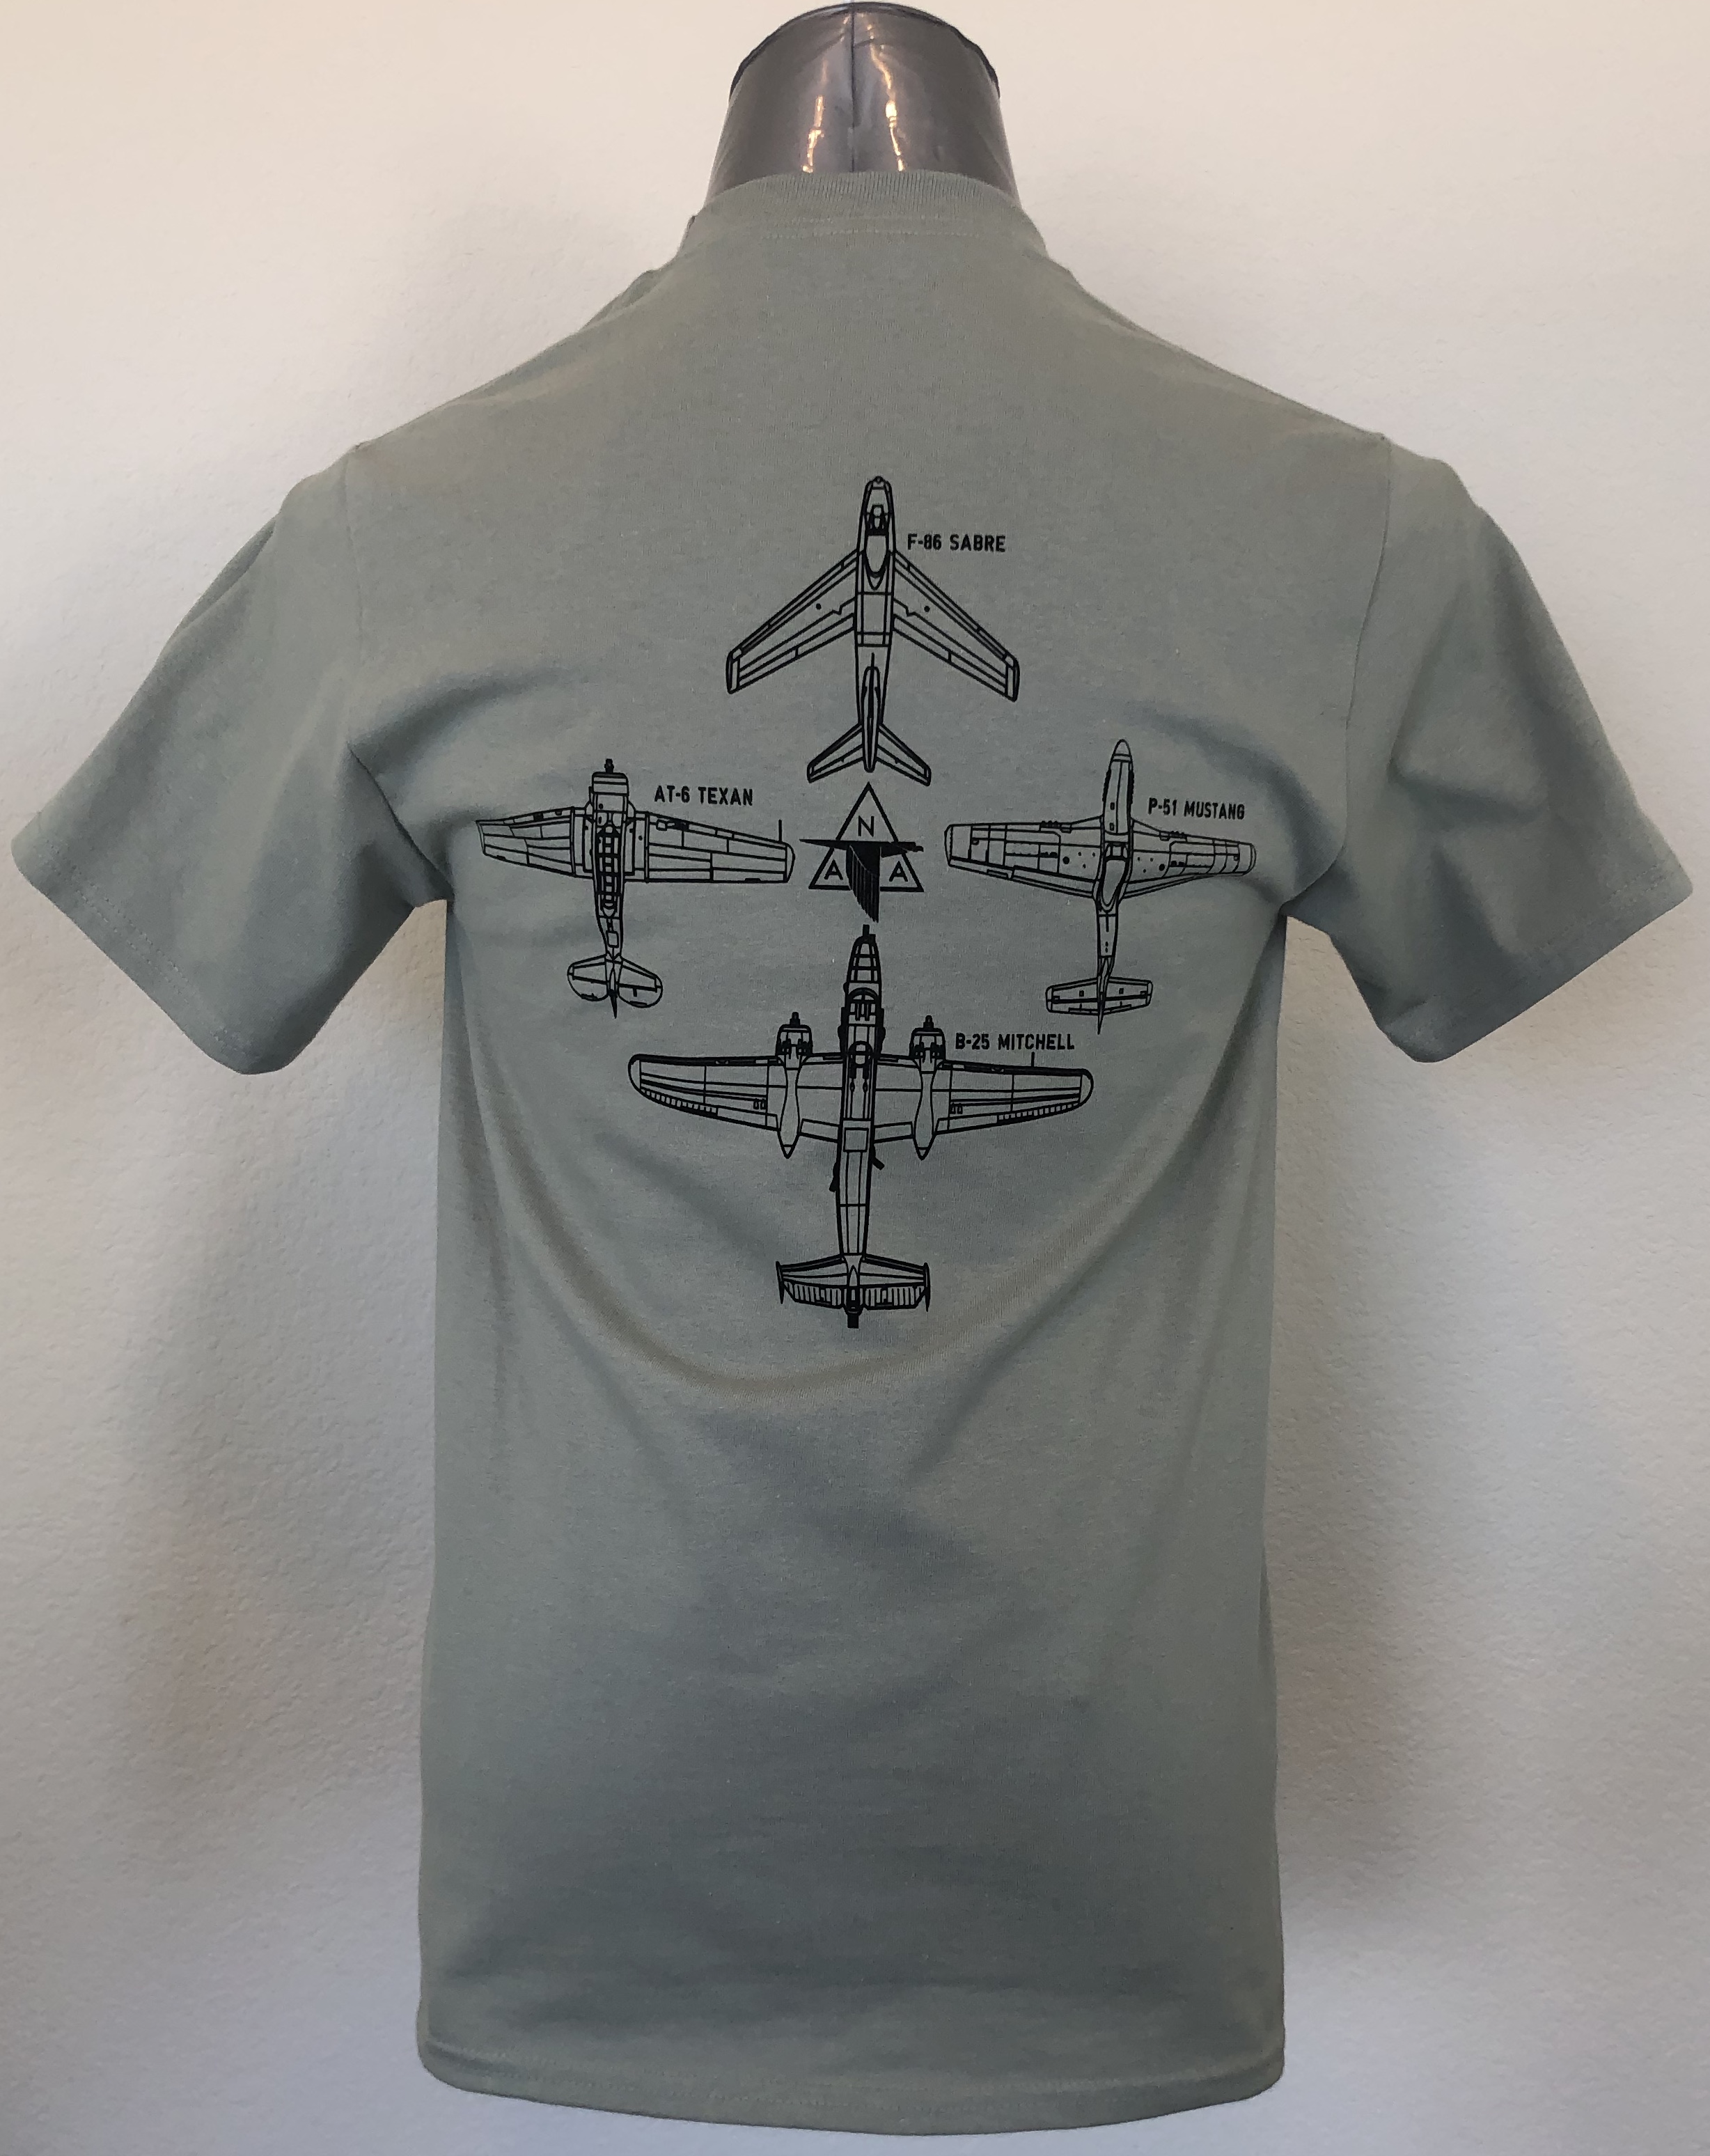 north american aviation t shirt